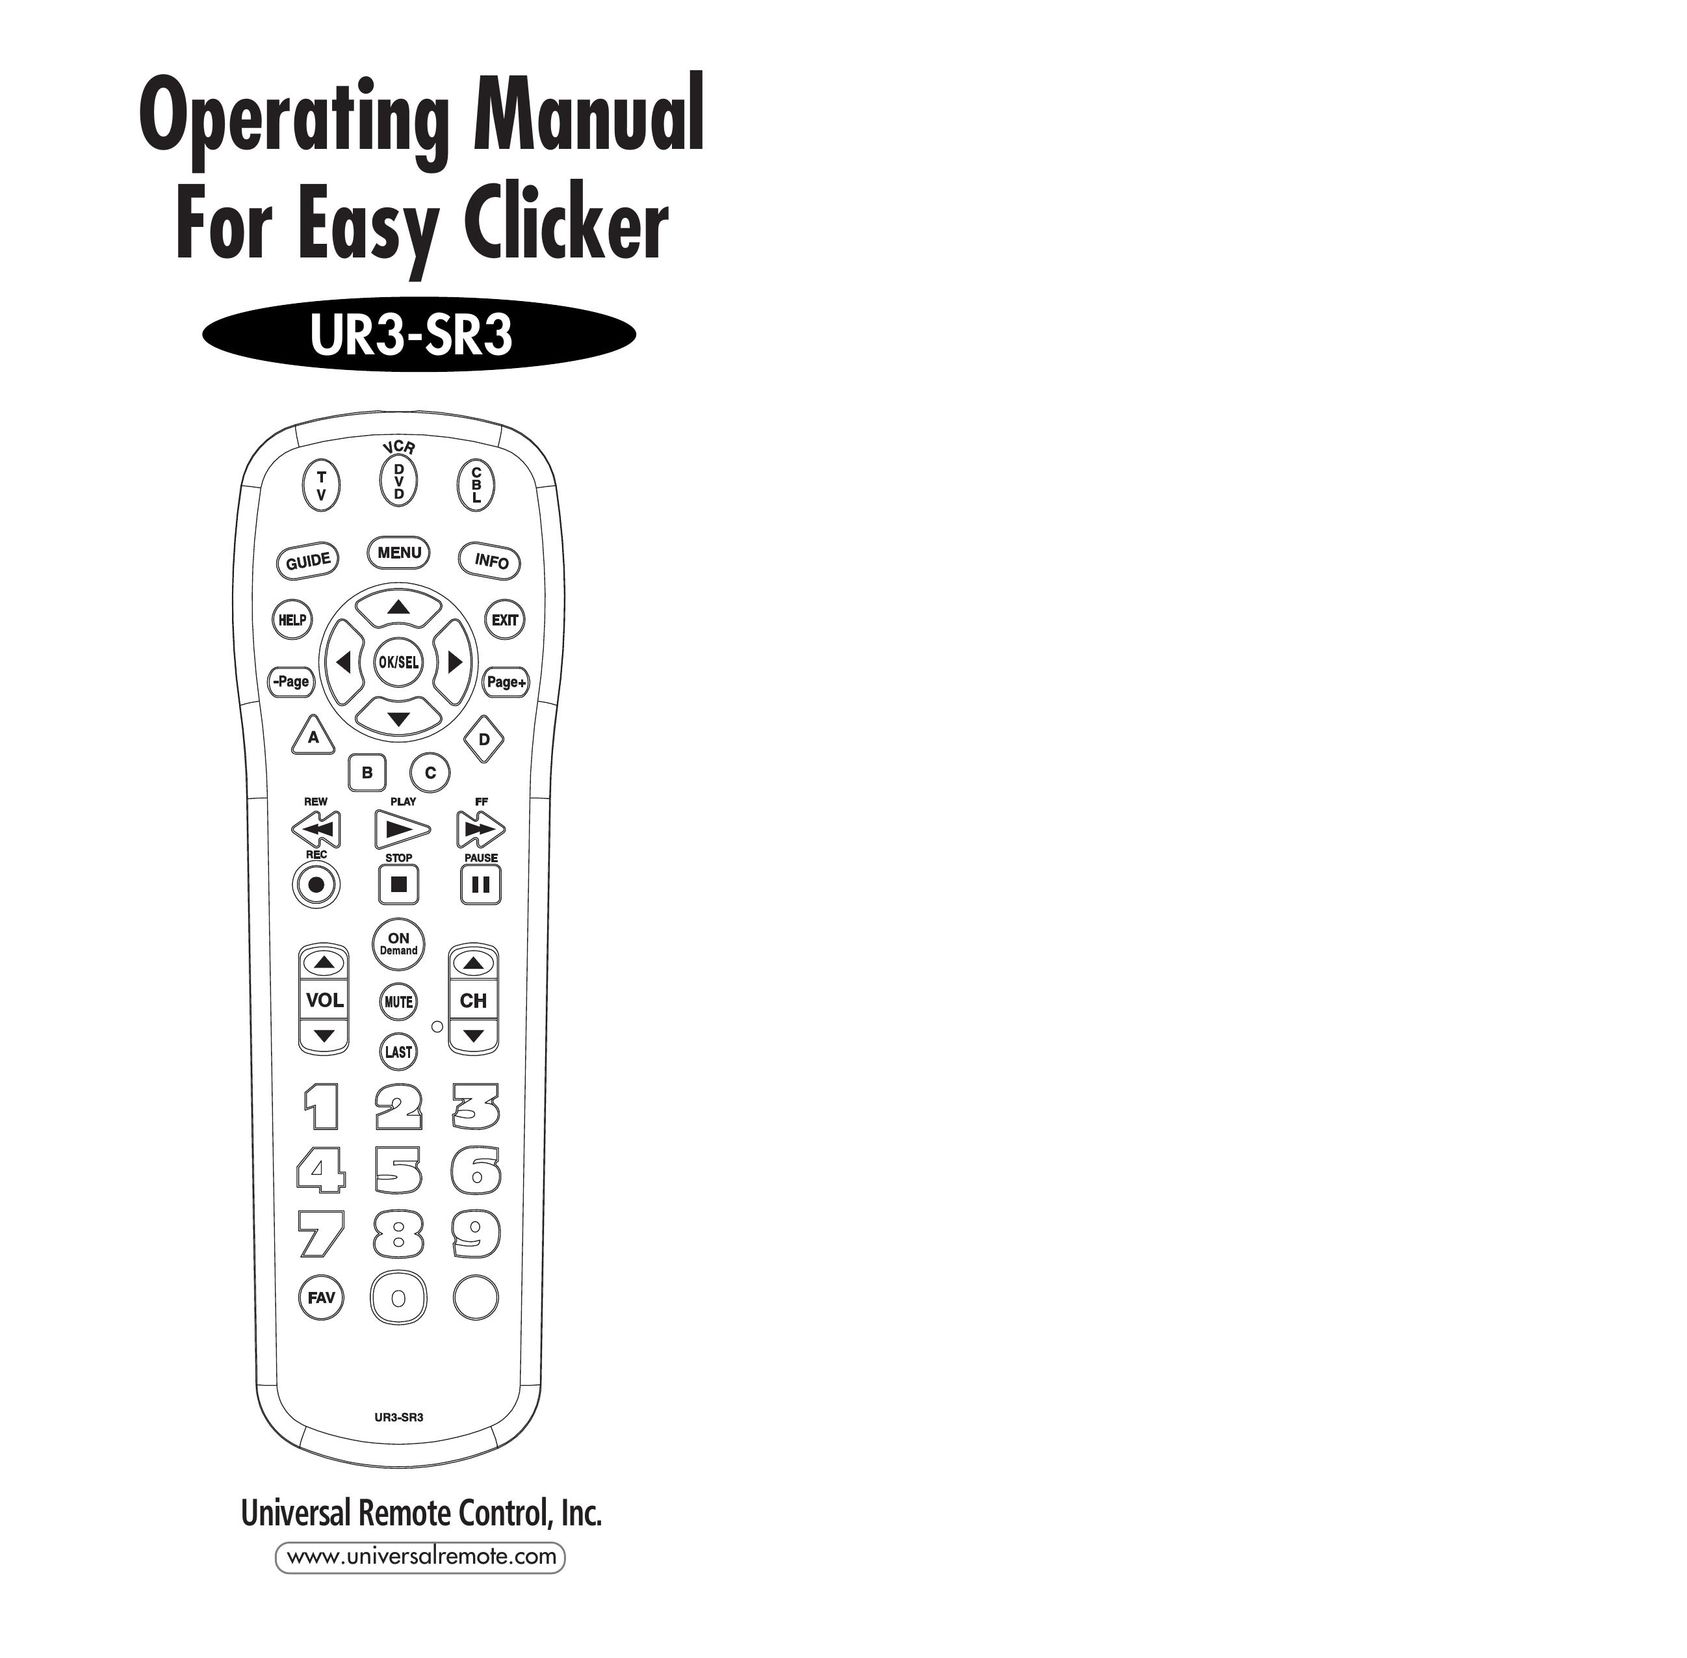 Universal Remote Control OCE-0009D Universal Remote User Manual